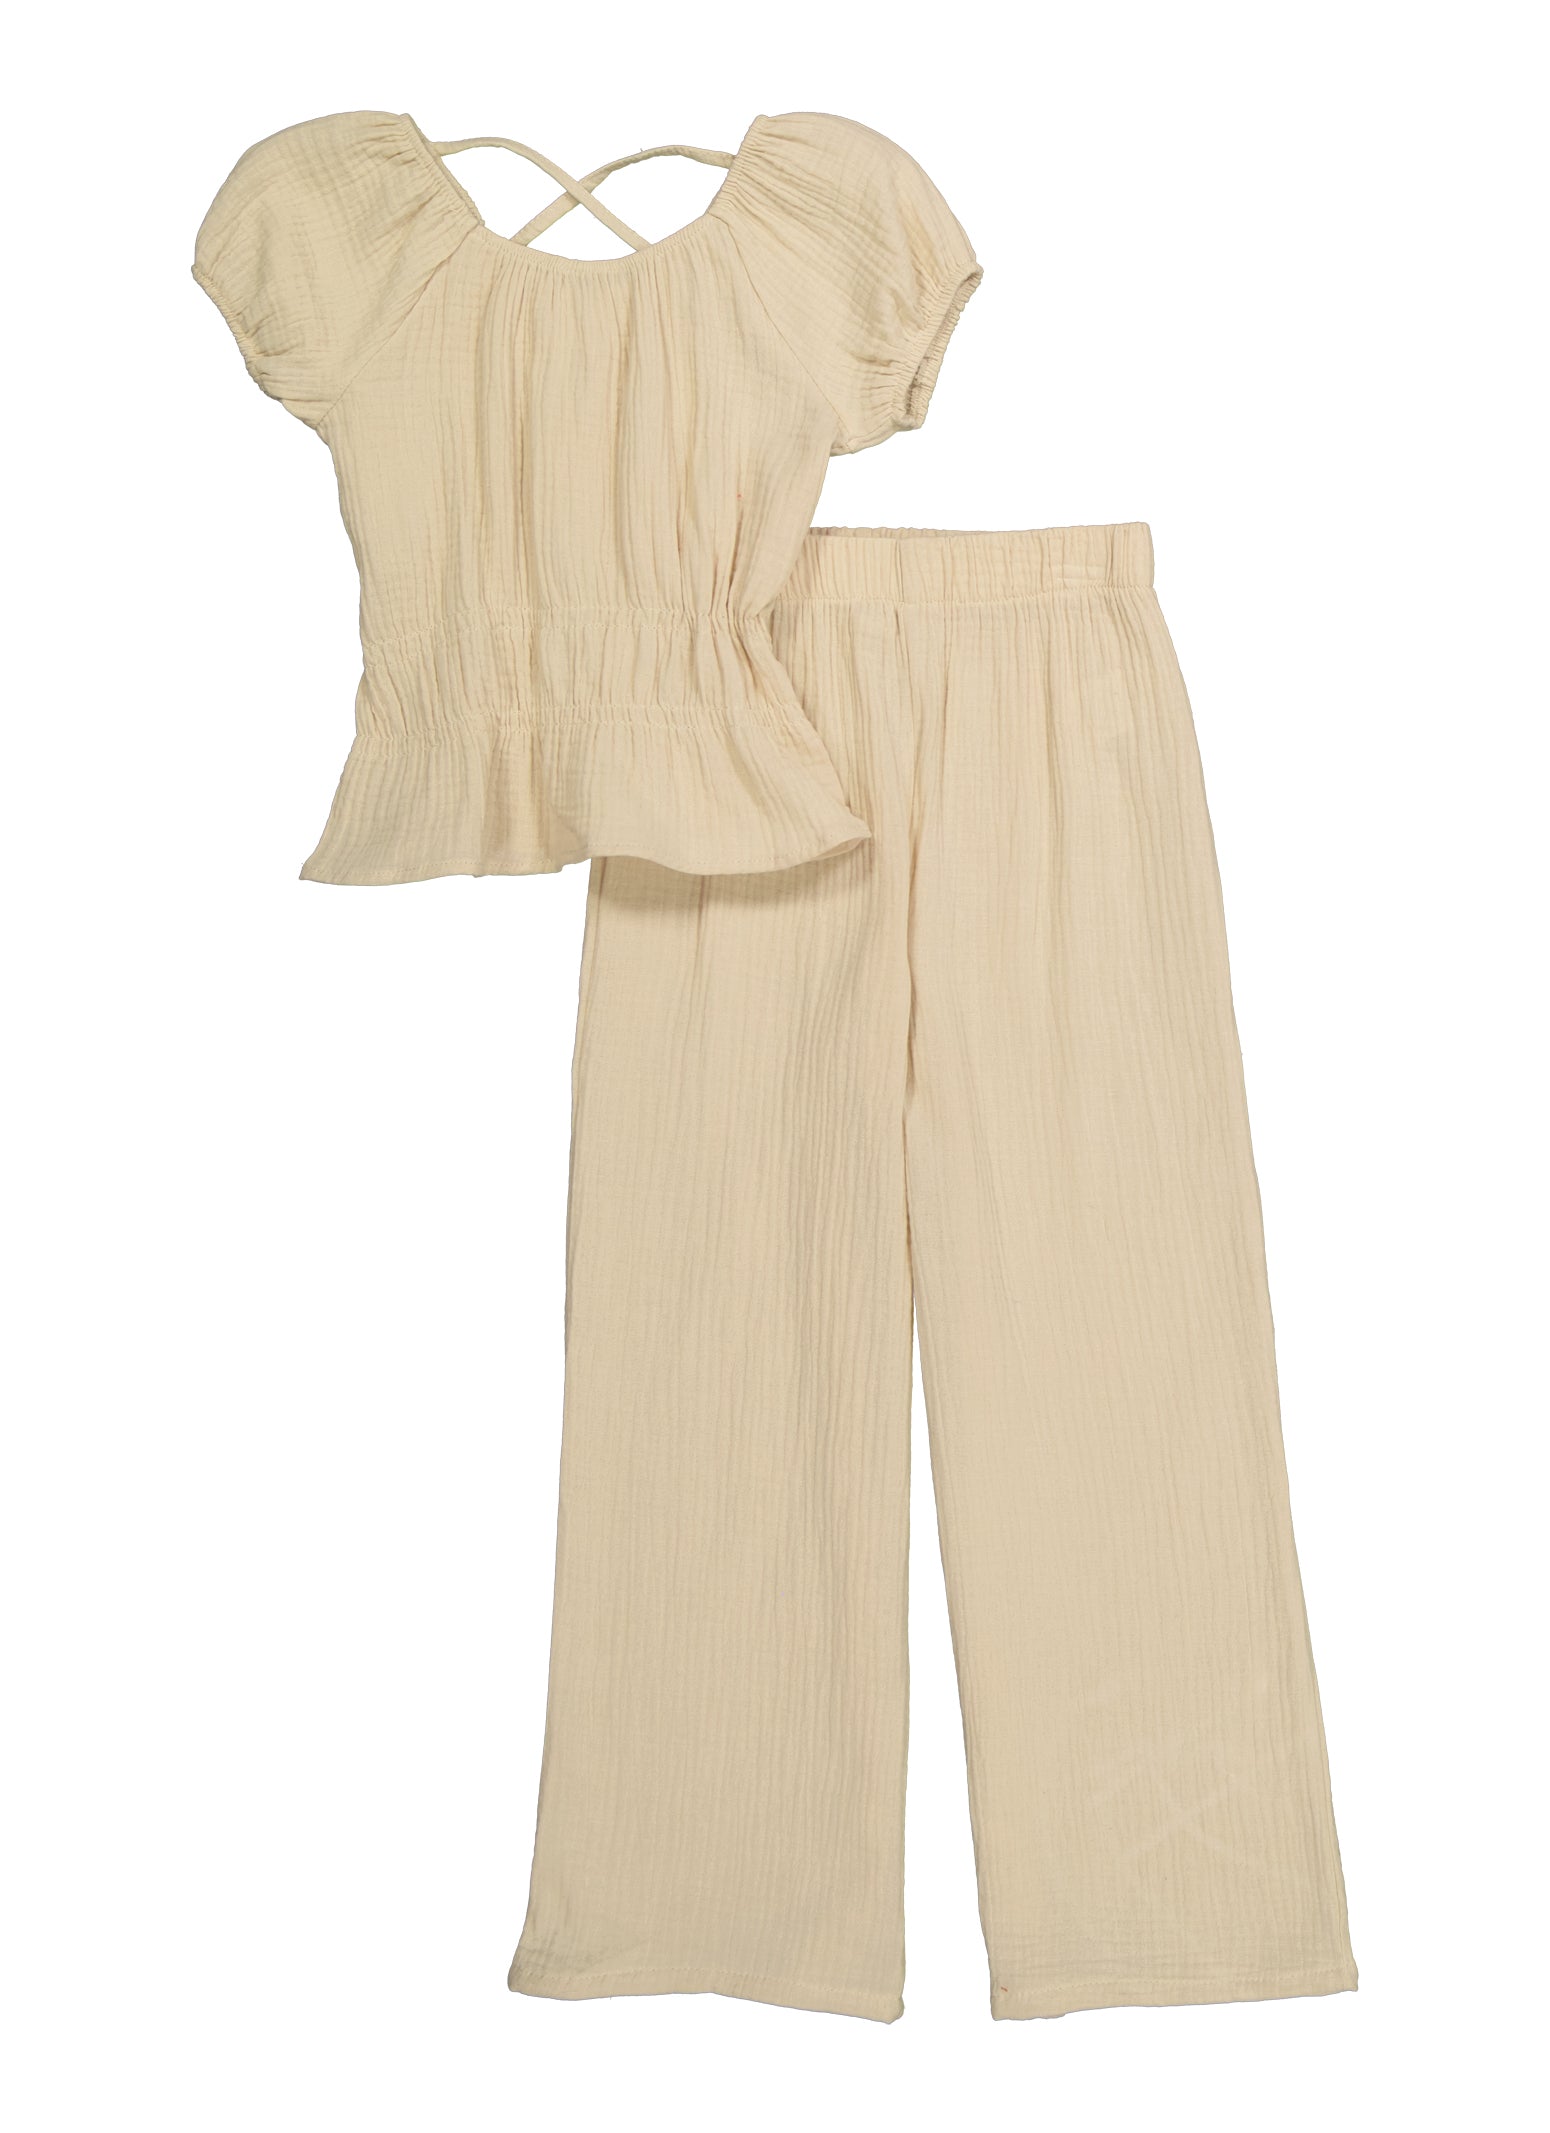 Girls Cotton Woven Peplum Top and Wide Leg Pants - Khaki